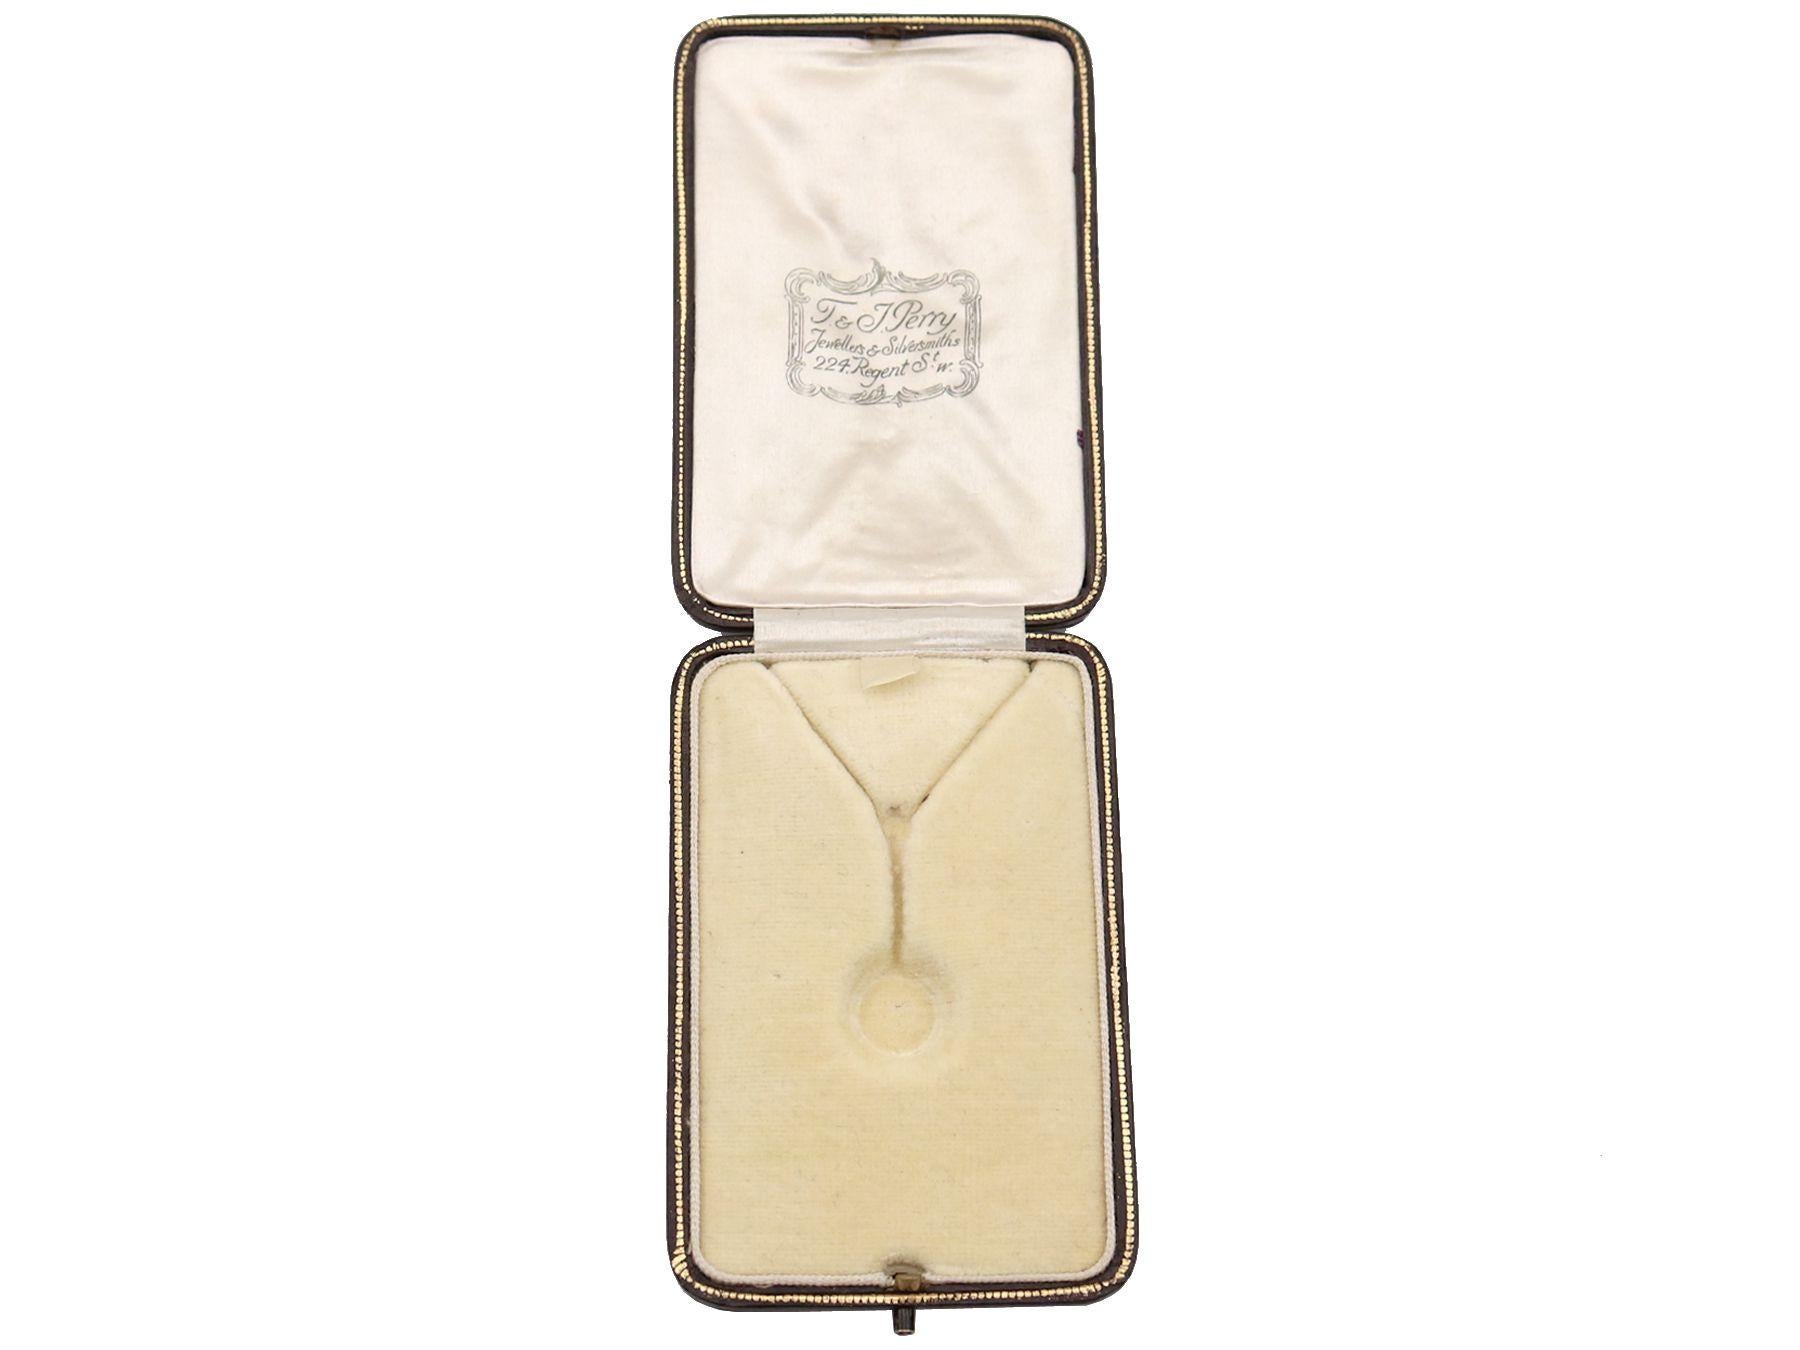 Antique 12.69 Carat Zircon and 1.04 Carat Diamond Necklace For Sale 1